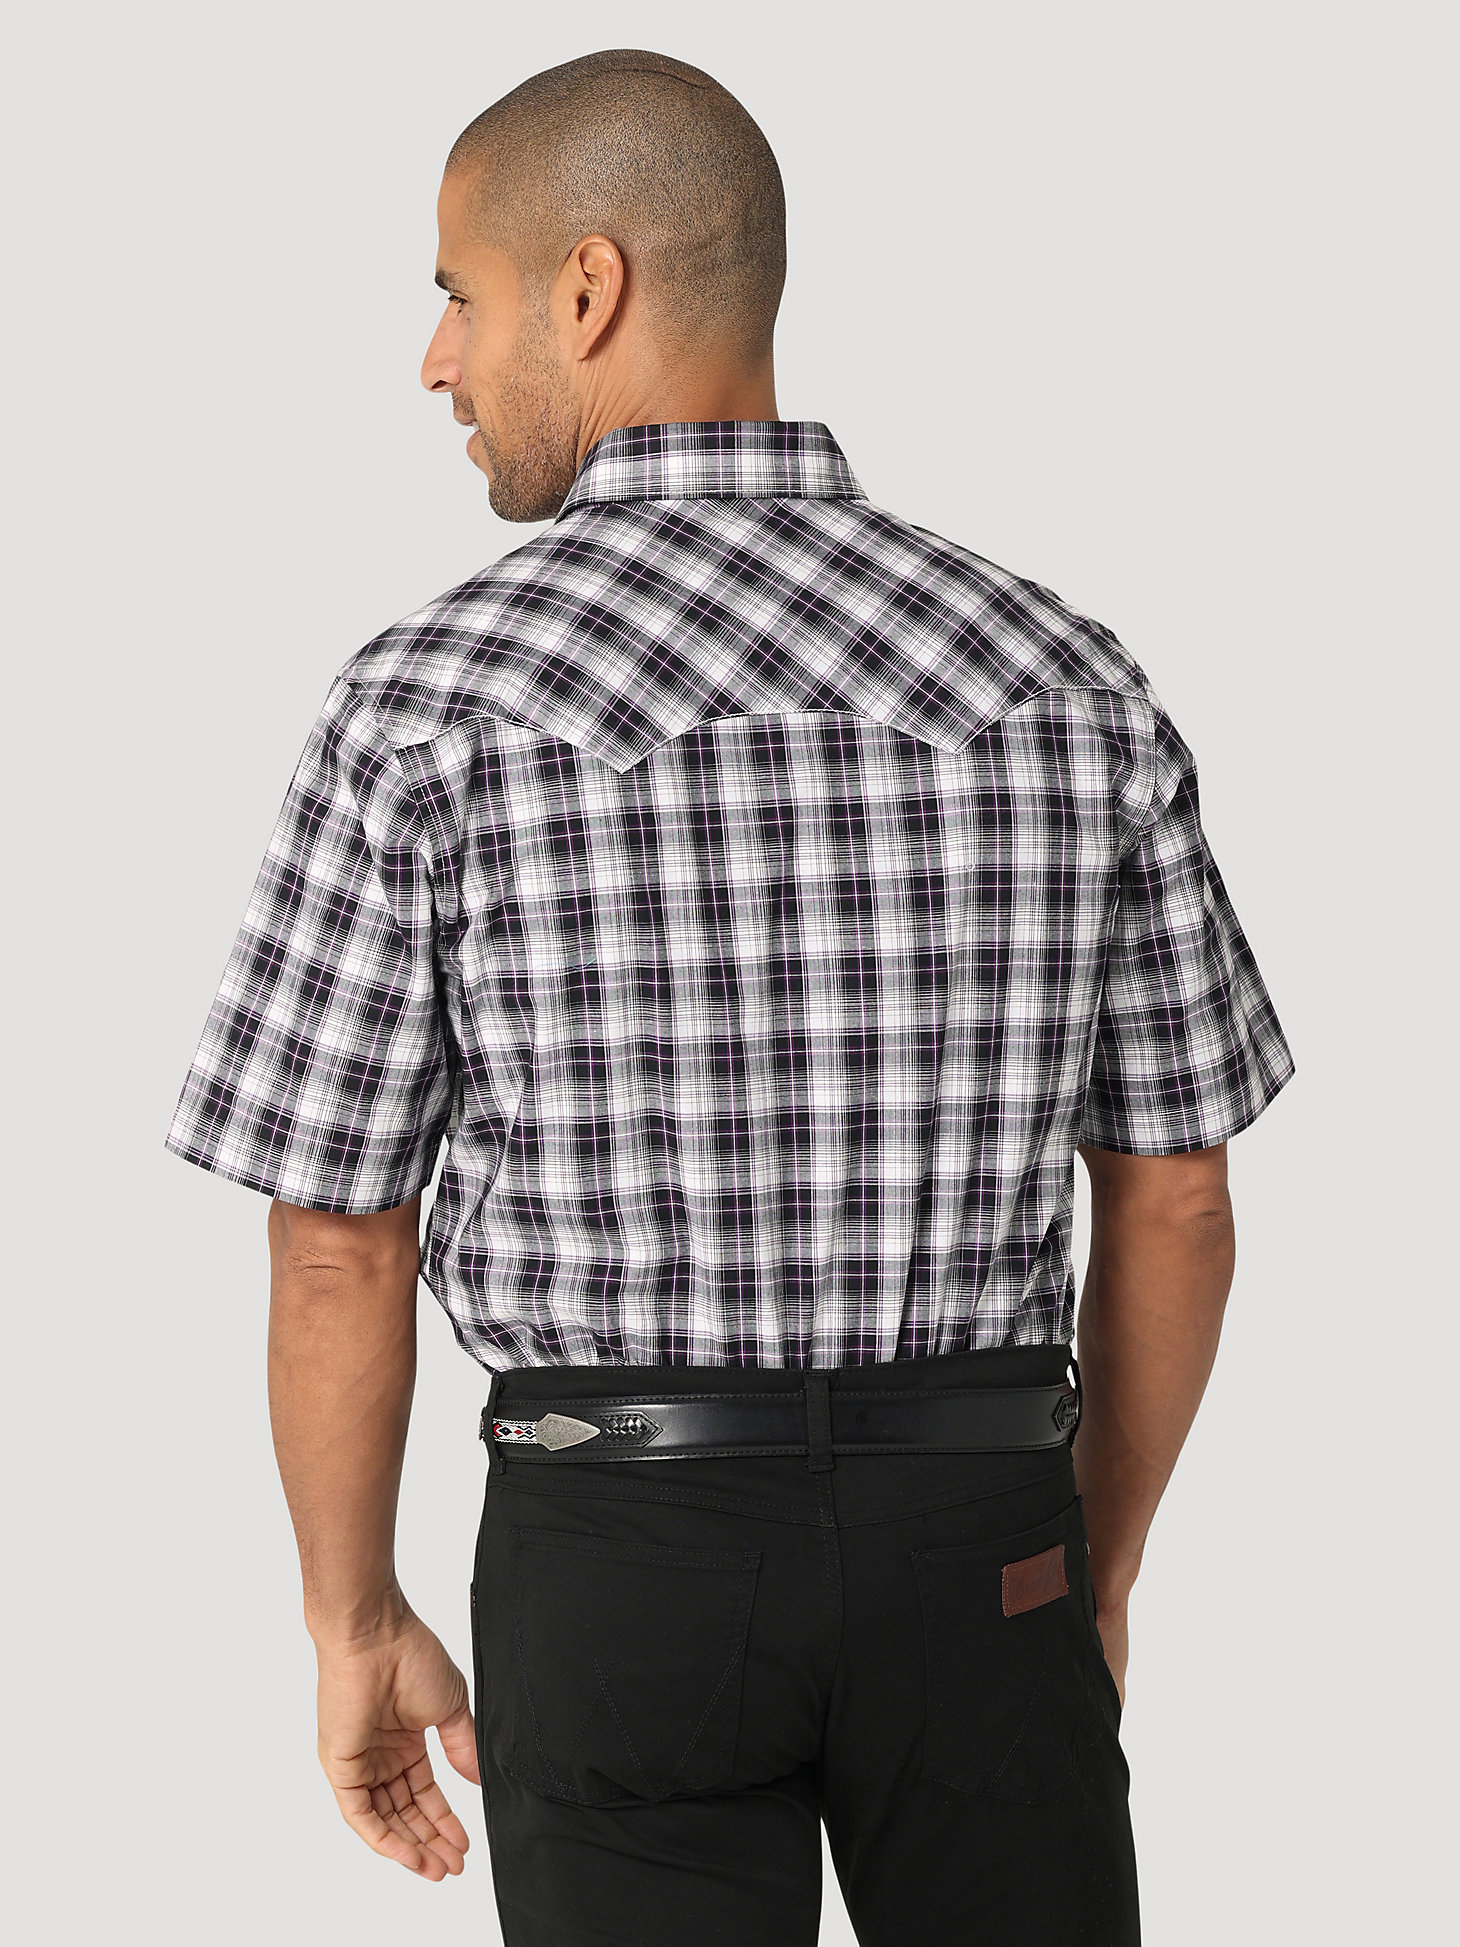 Men's Wrangler Retro® Short Sleeve Western Snap with Sawtooth Flap Pocket Plaid Shirt in Black White alternative view 1